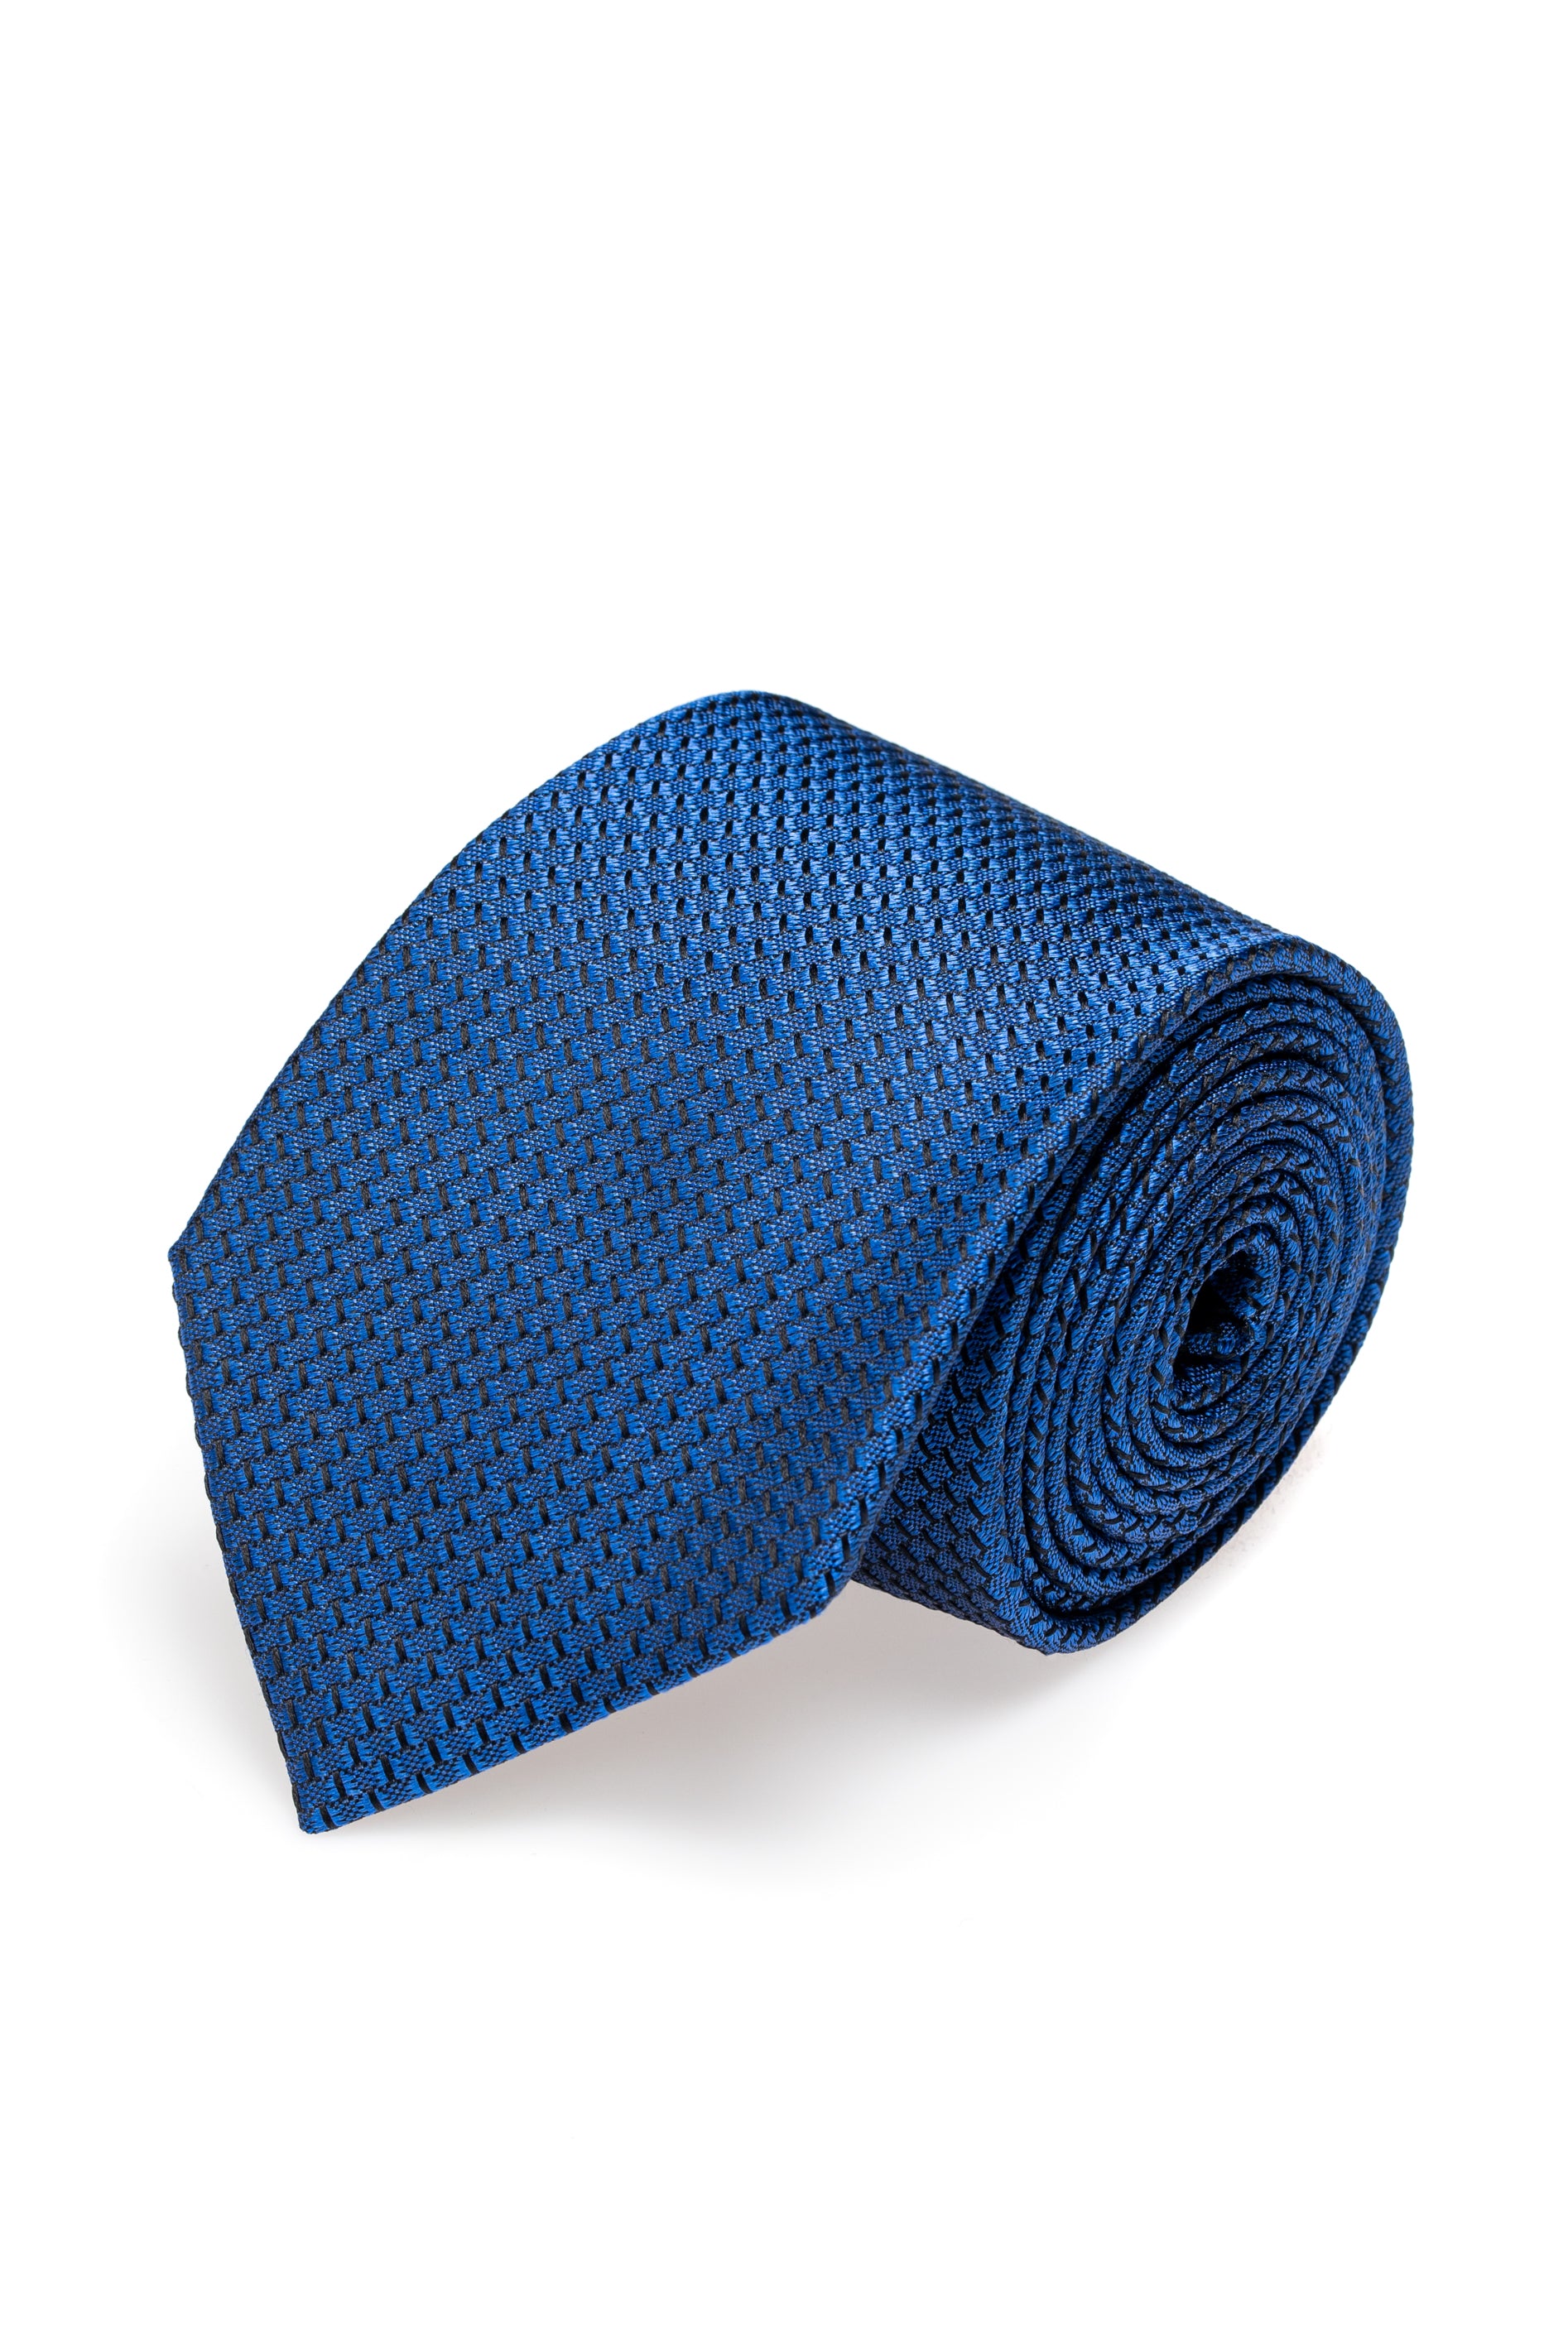 Cravatta in seta blu navy testurizzata